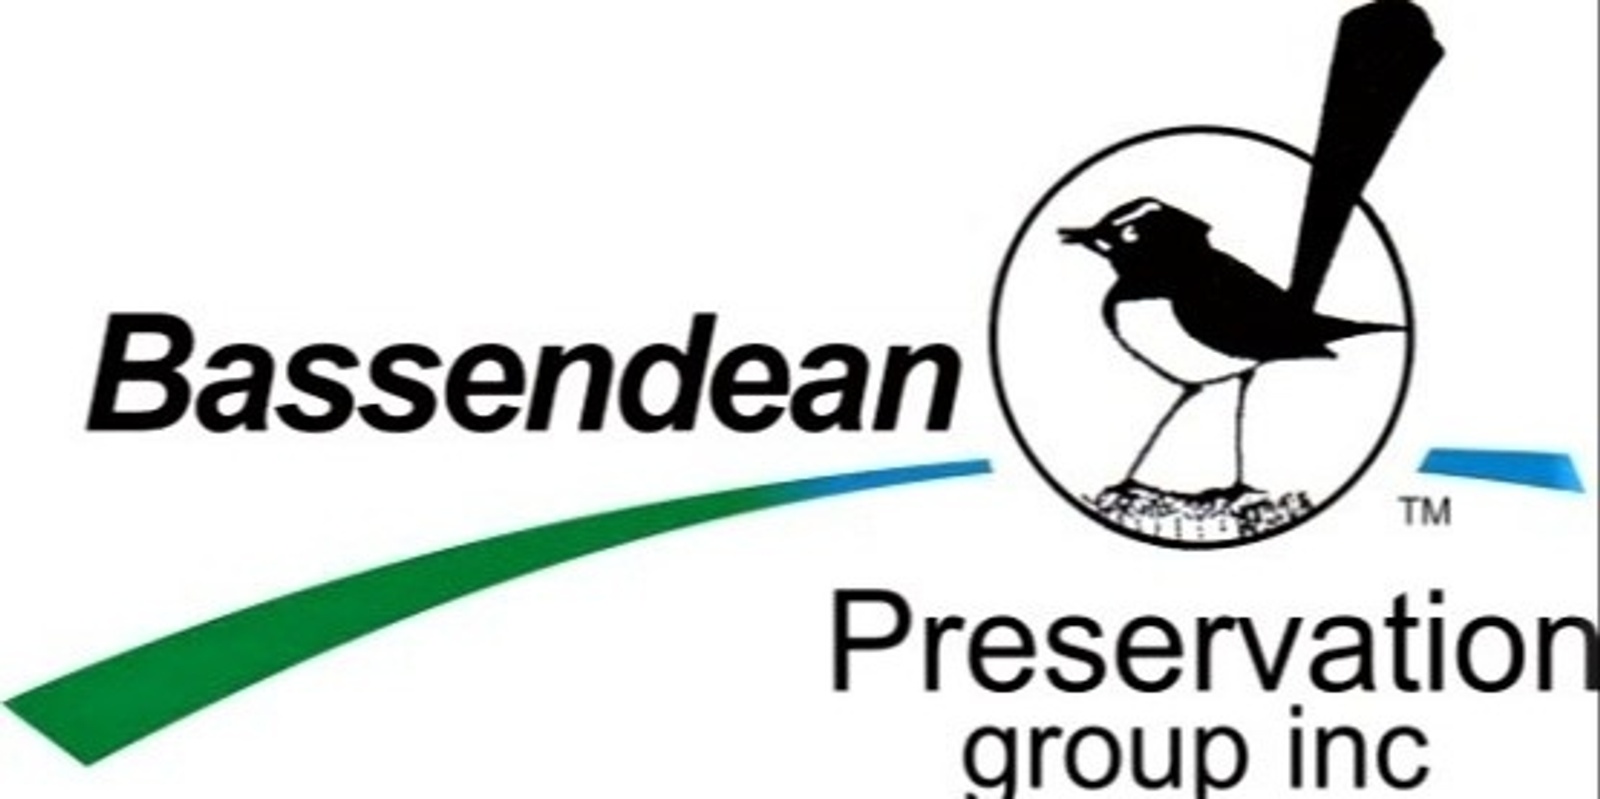 Bassendean Preservation Group Inc.'s banner